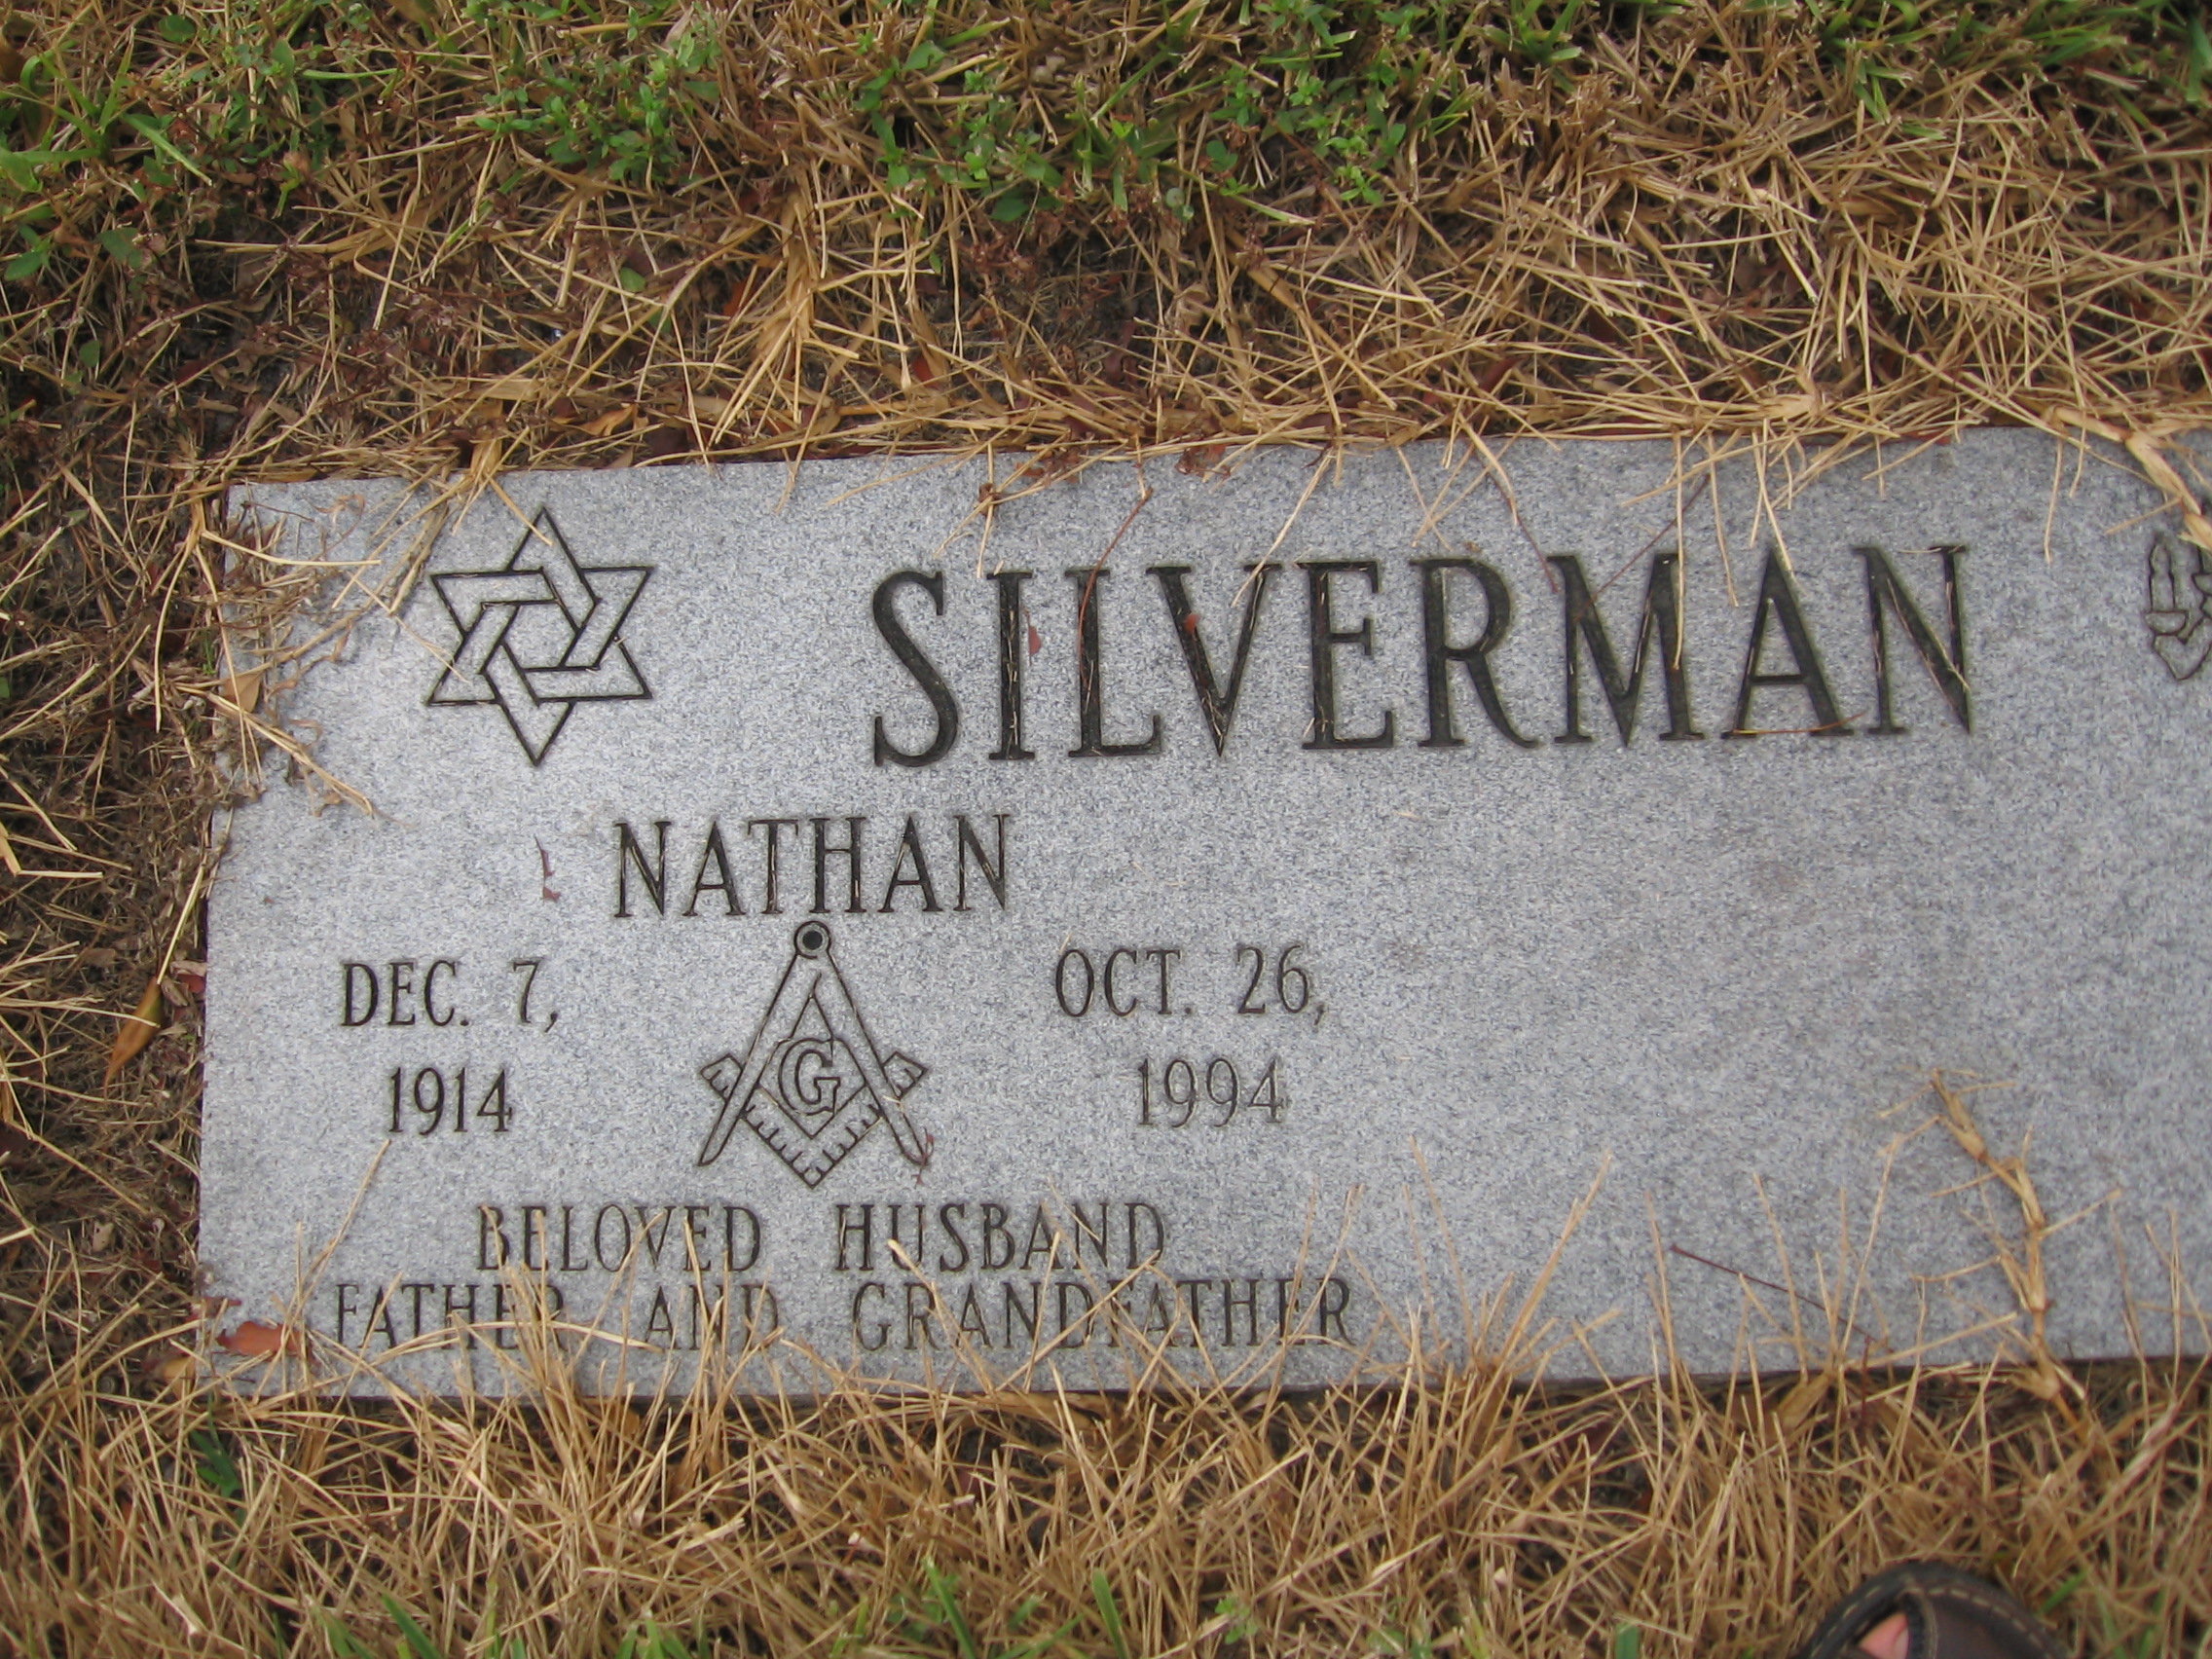 Nathan Silverman